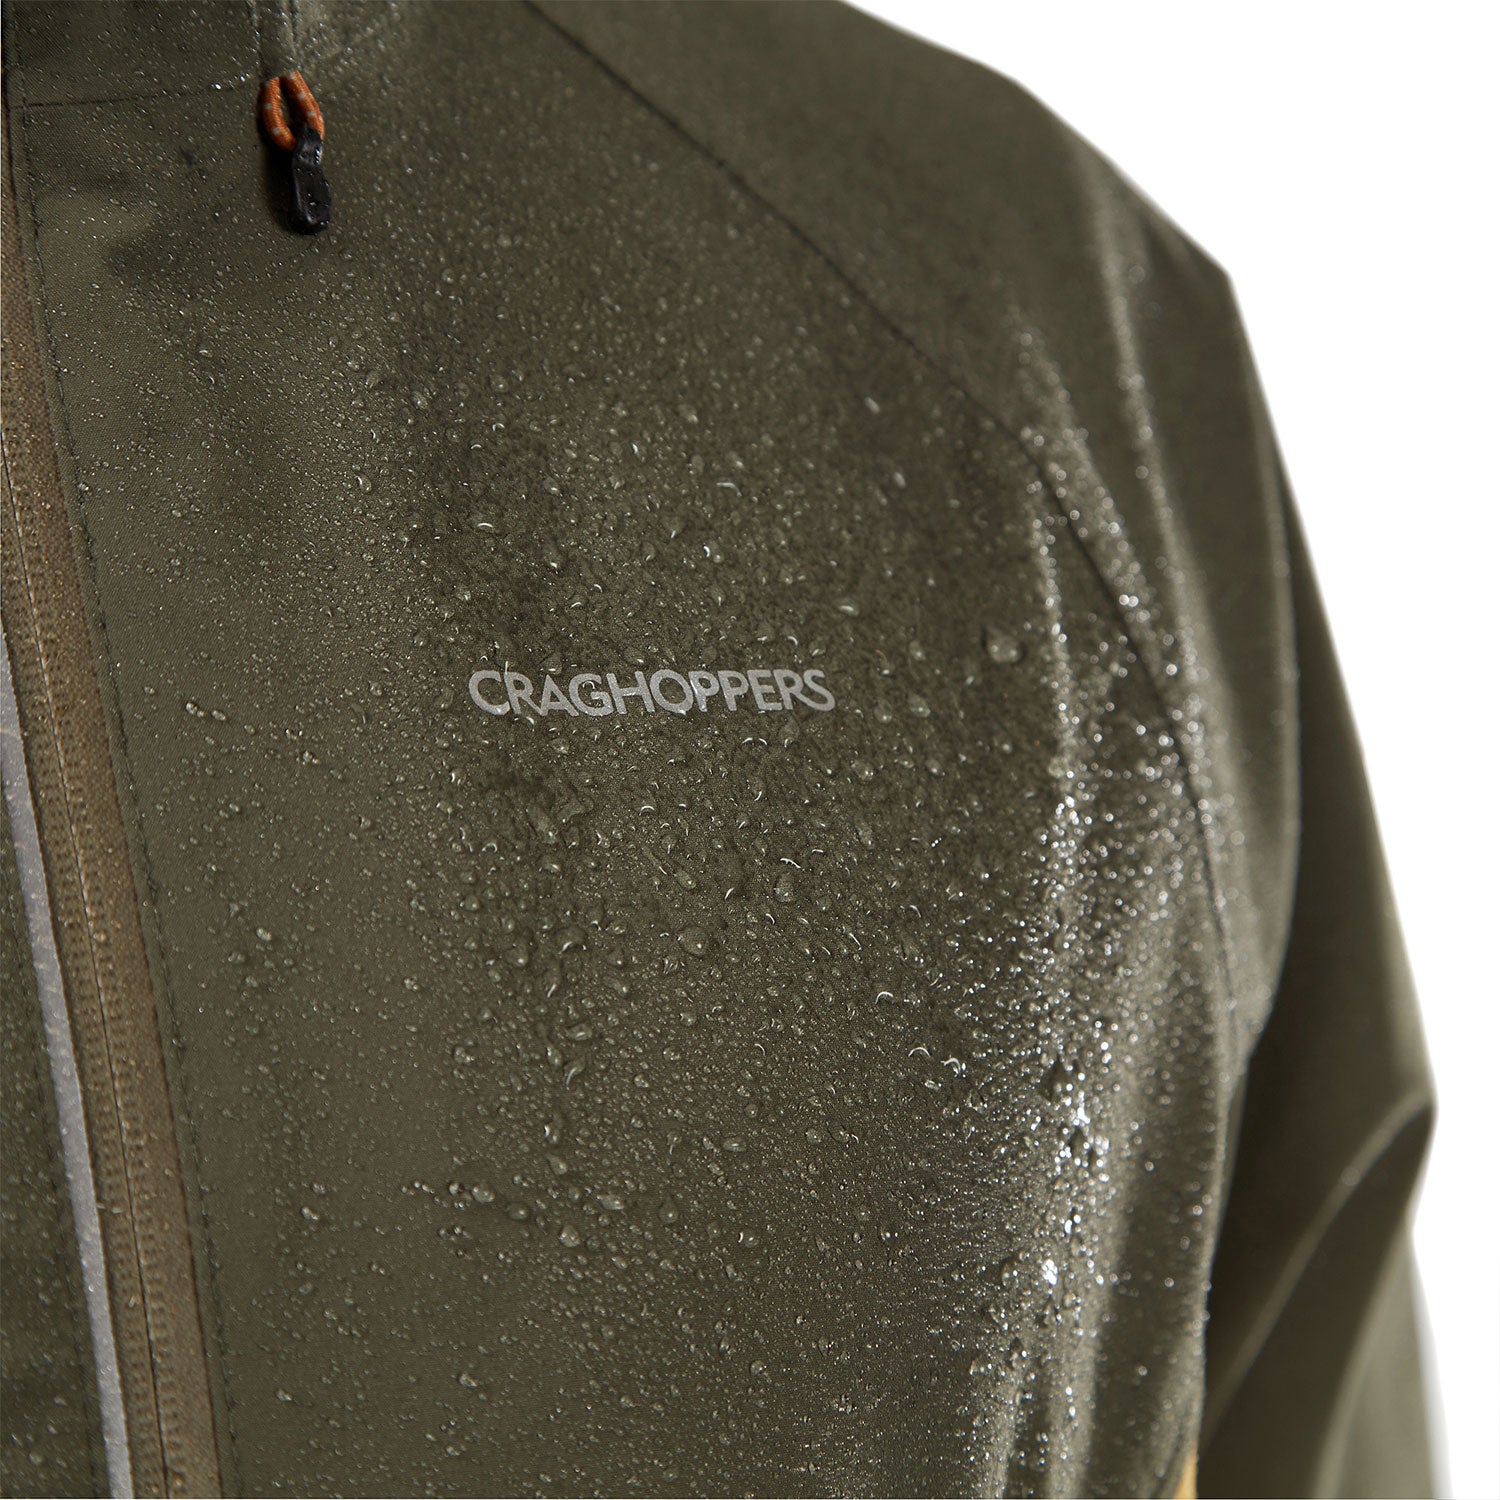 Craghoppers jacket showing rain beading